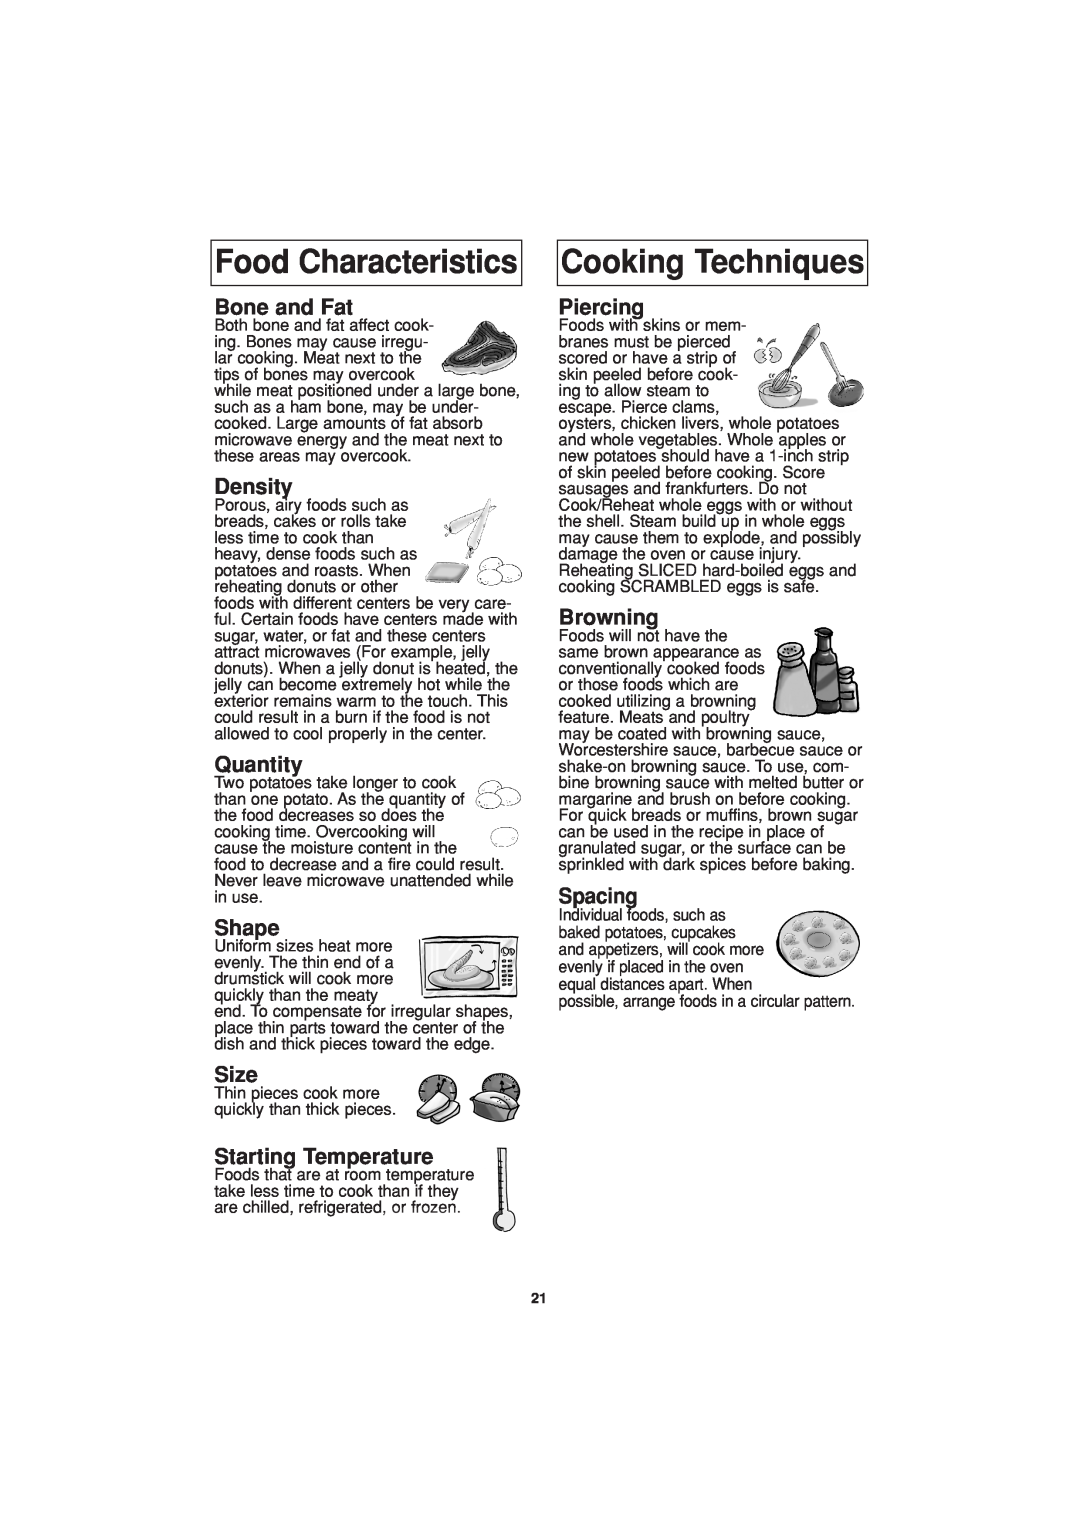 Panasonic NN-H624 Food Characteristics, Cooking Techniques, Bone and Fat, Density, Quantity, Shape, Size, Piercing 